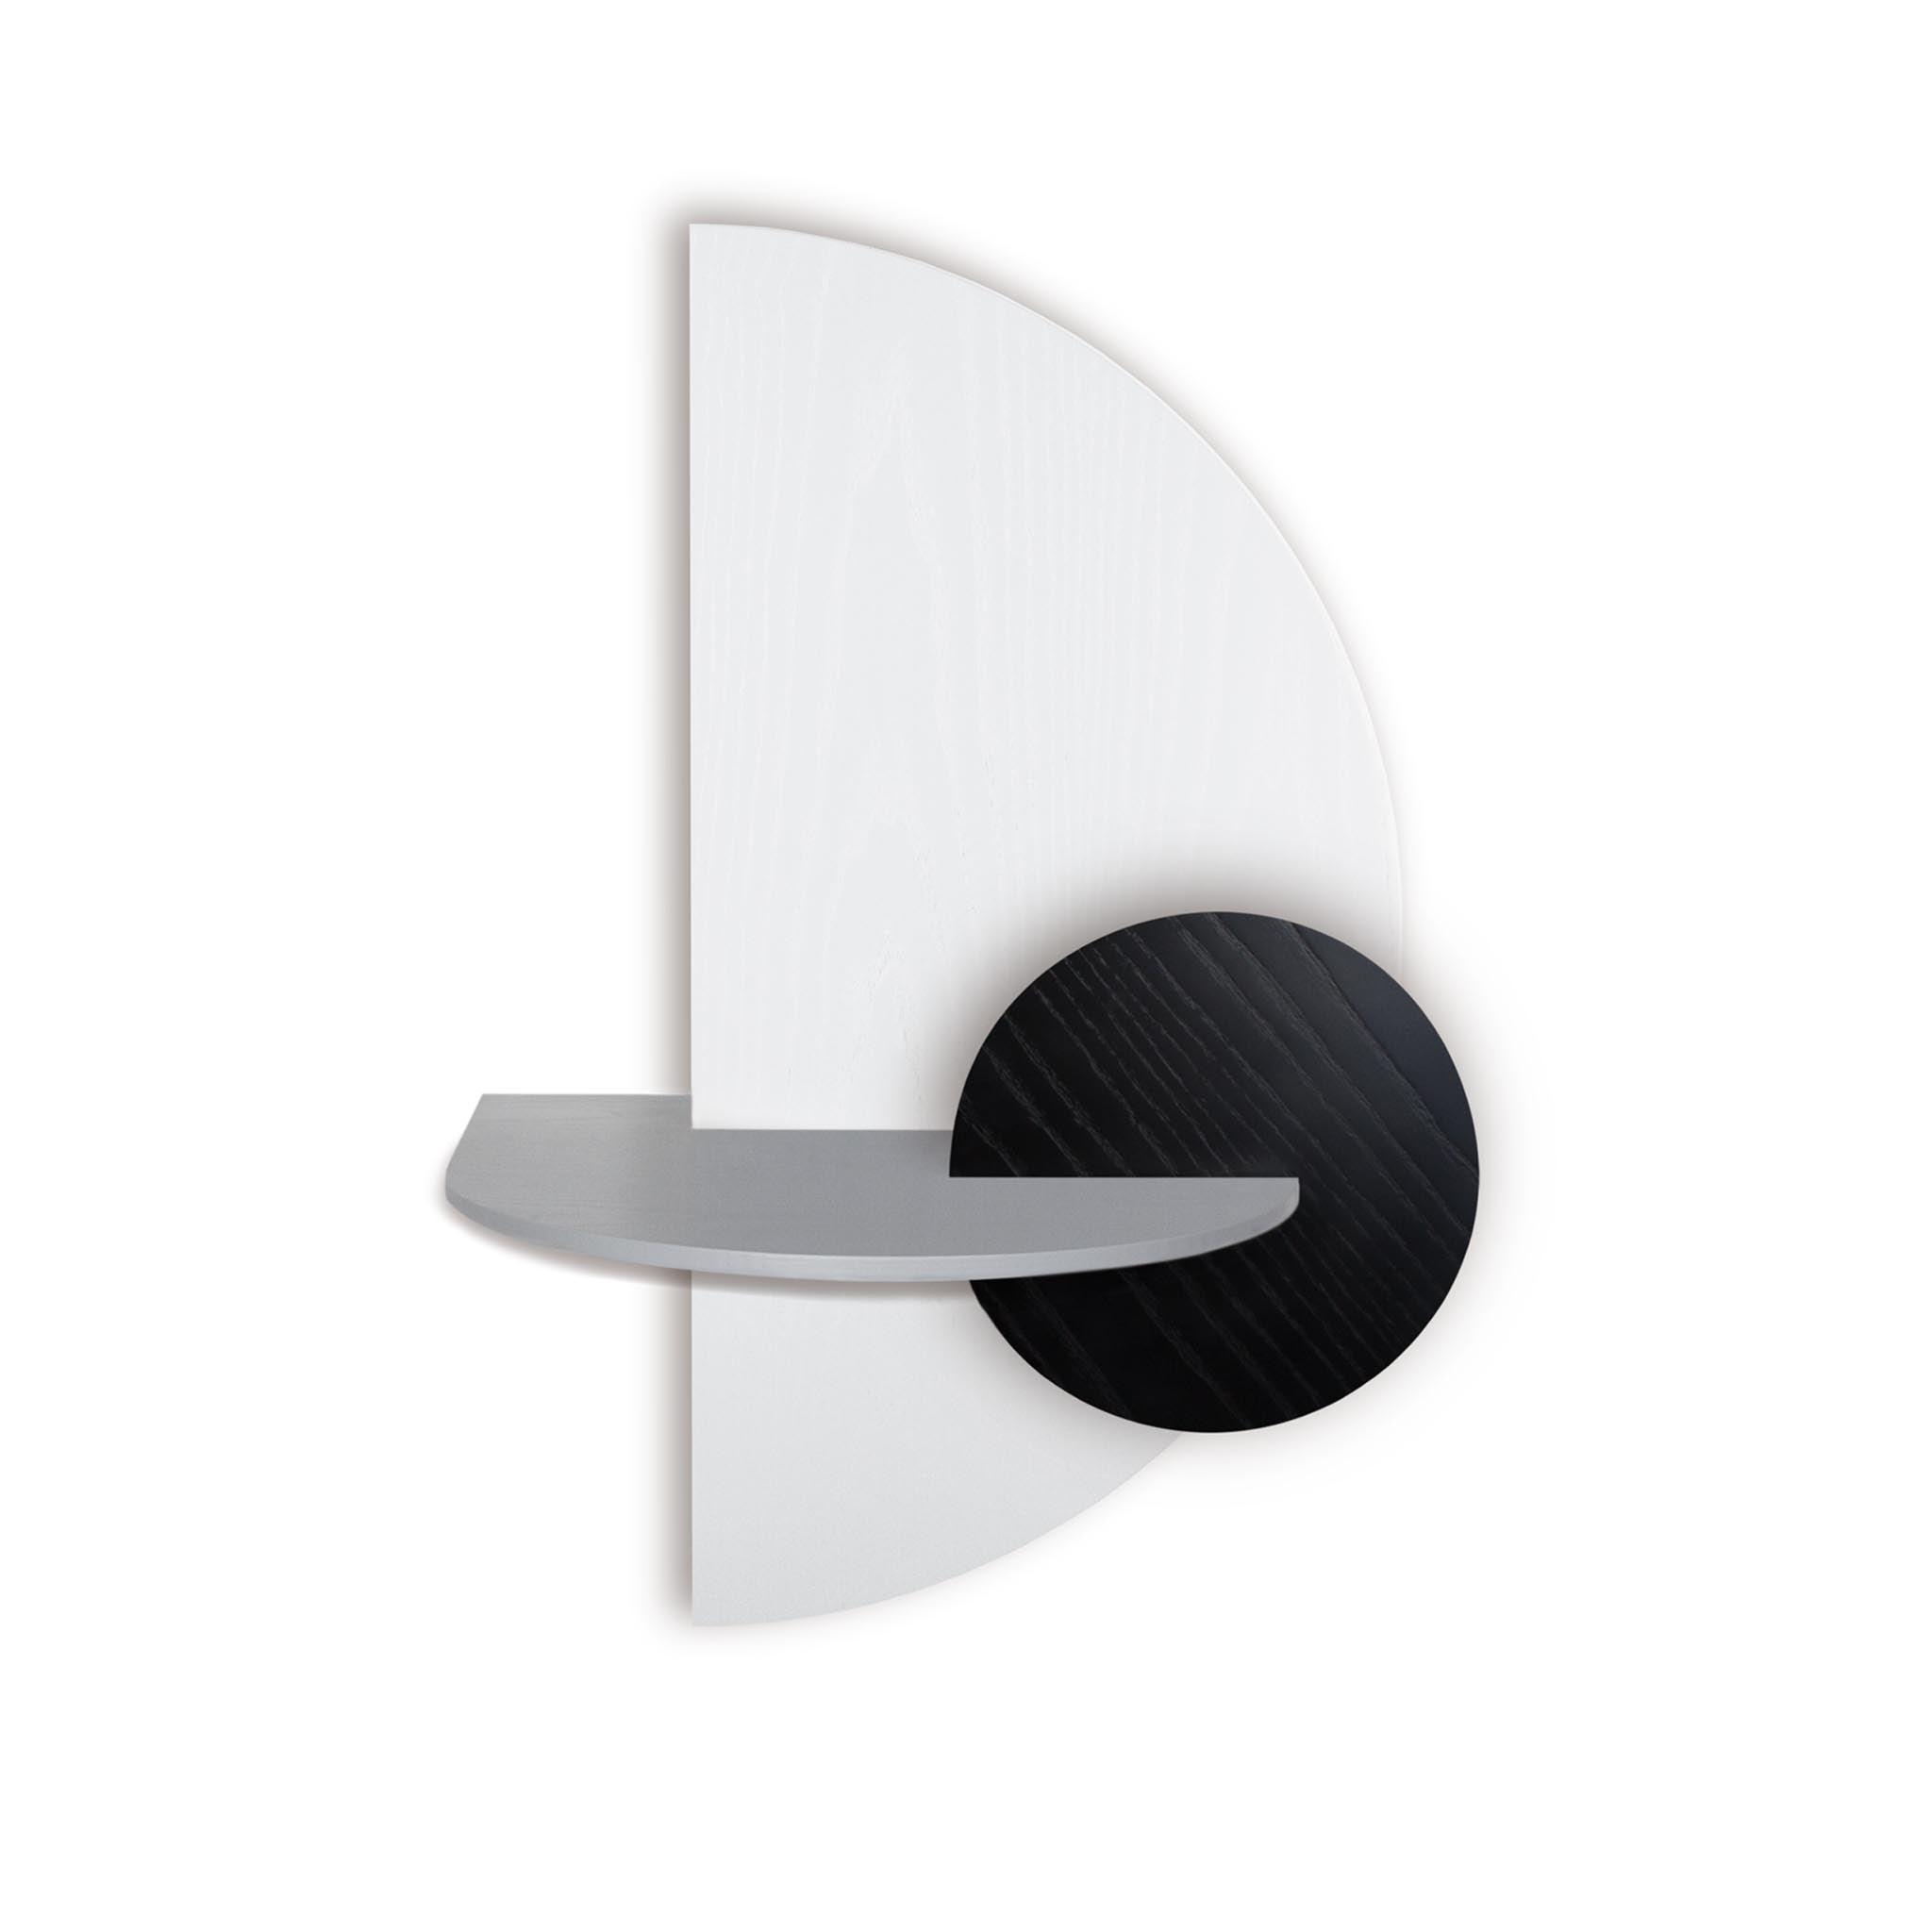 Alba floating nightstand · White semicircle